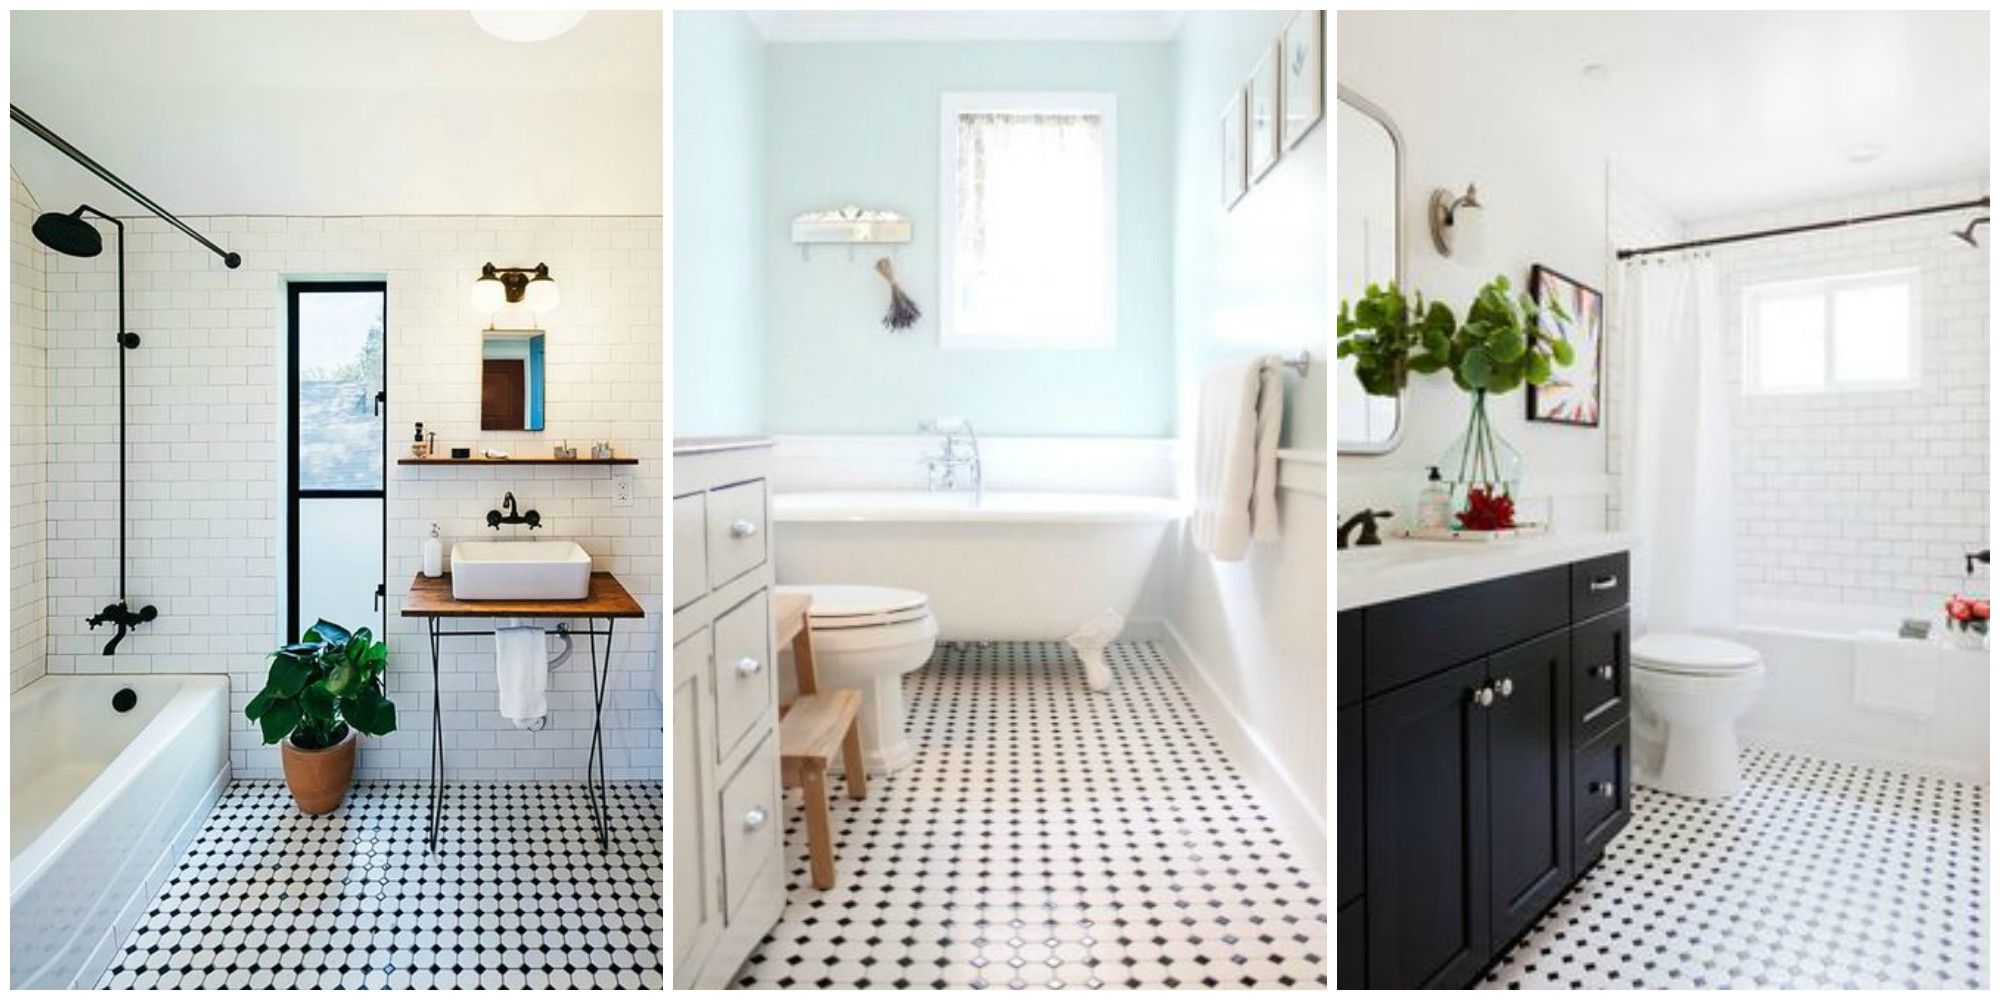 https://hips.hearstapps.com/countryliving/assets/17/09/1488320185-vintage-black-and-white-bathroom-floor-tile-mosaic-design-idea-inspiration.jpg